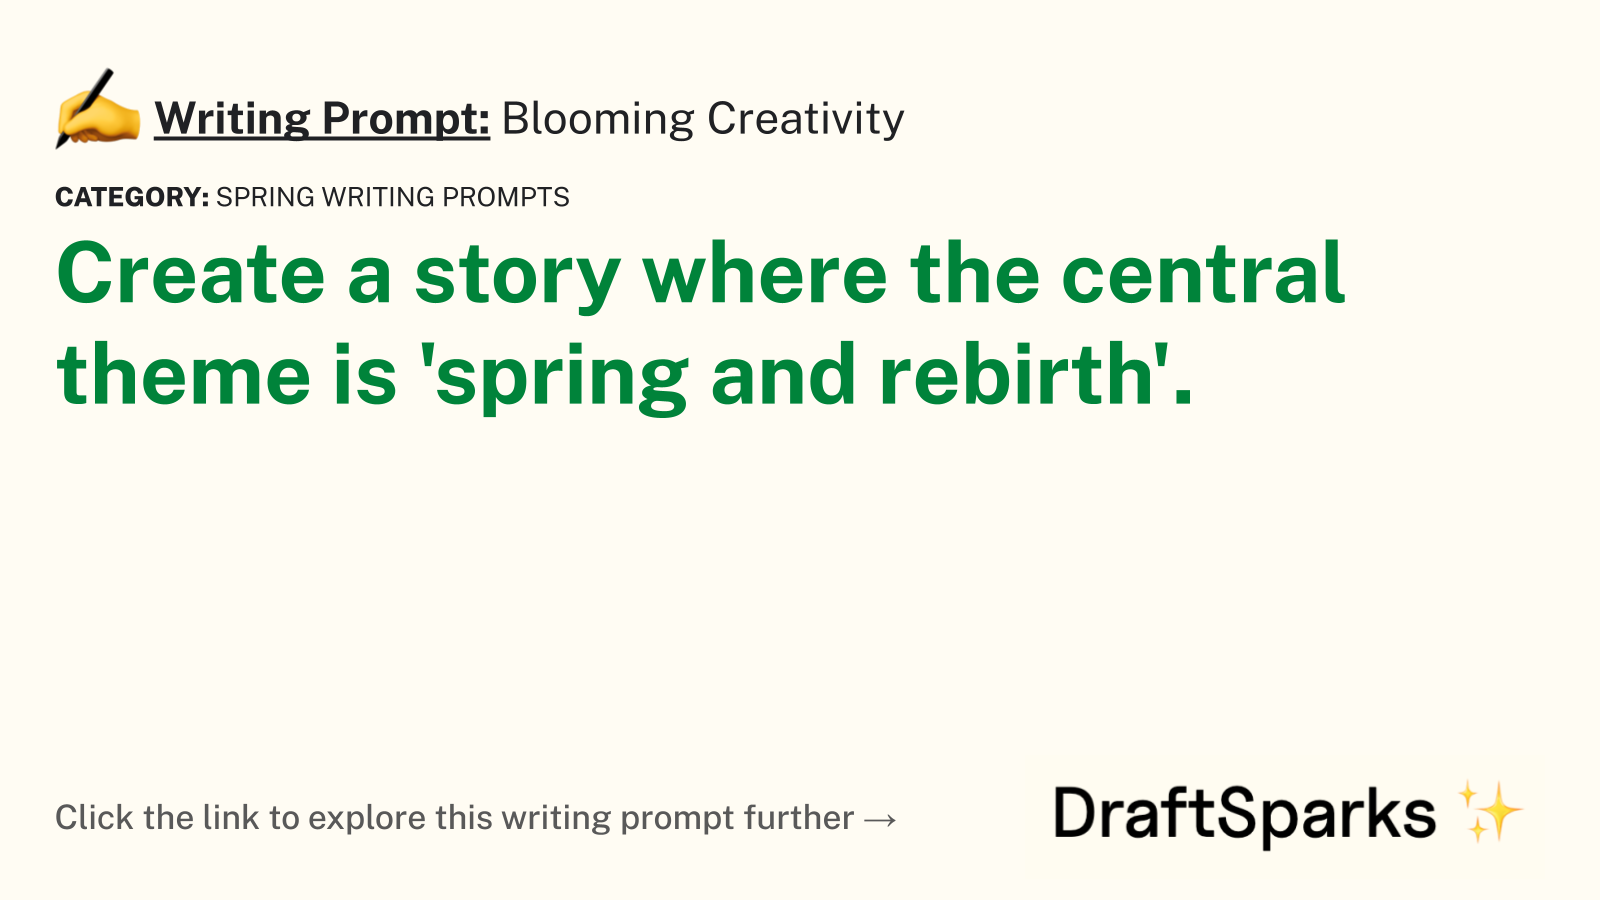 Blooming Creativity